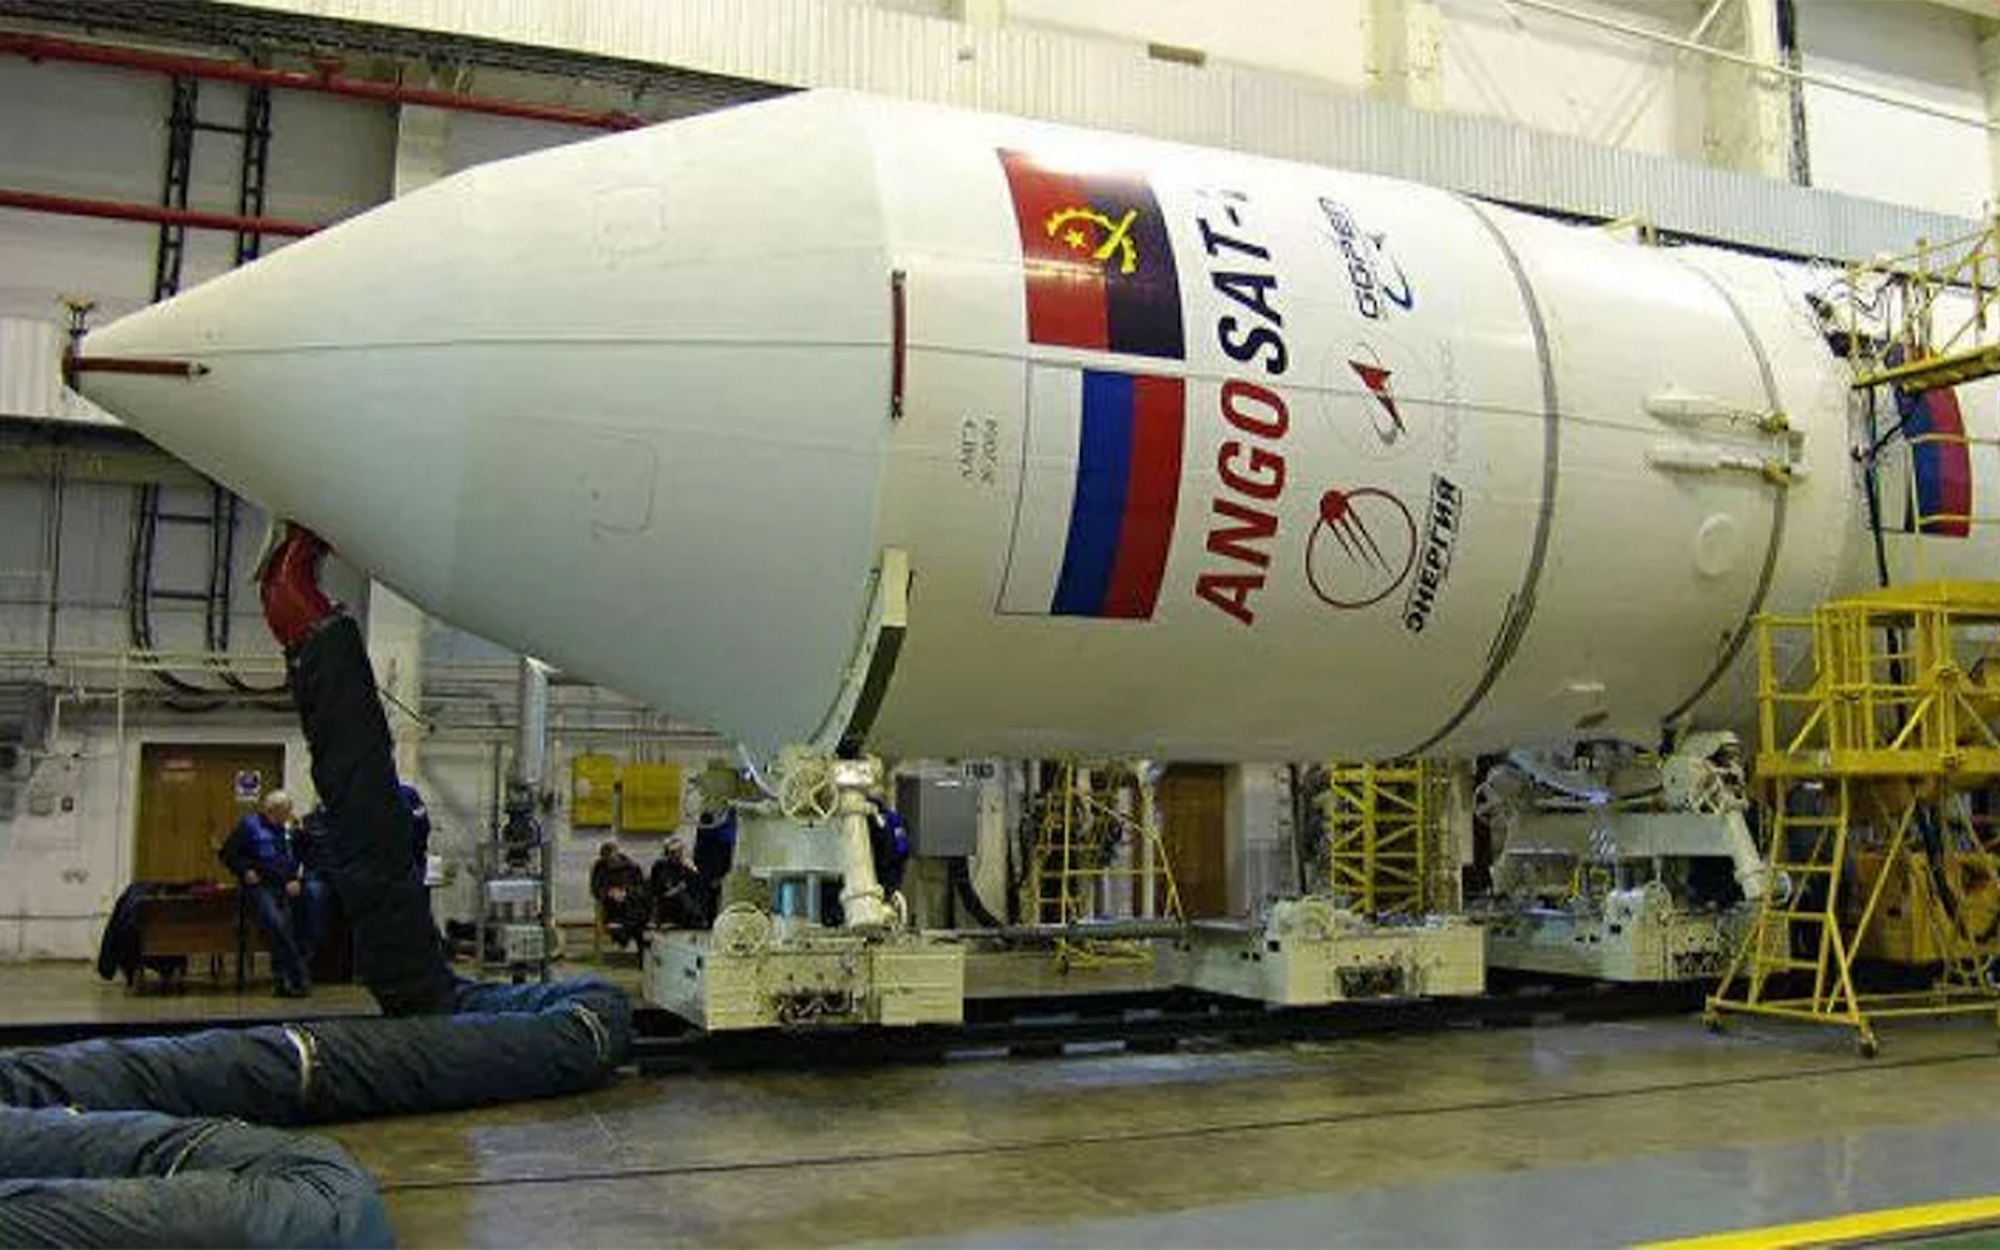 Russian rocket to launch Angolan satellite Angosat-2 into orbit today